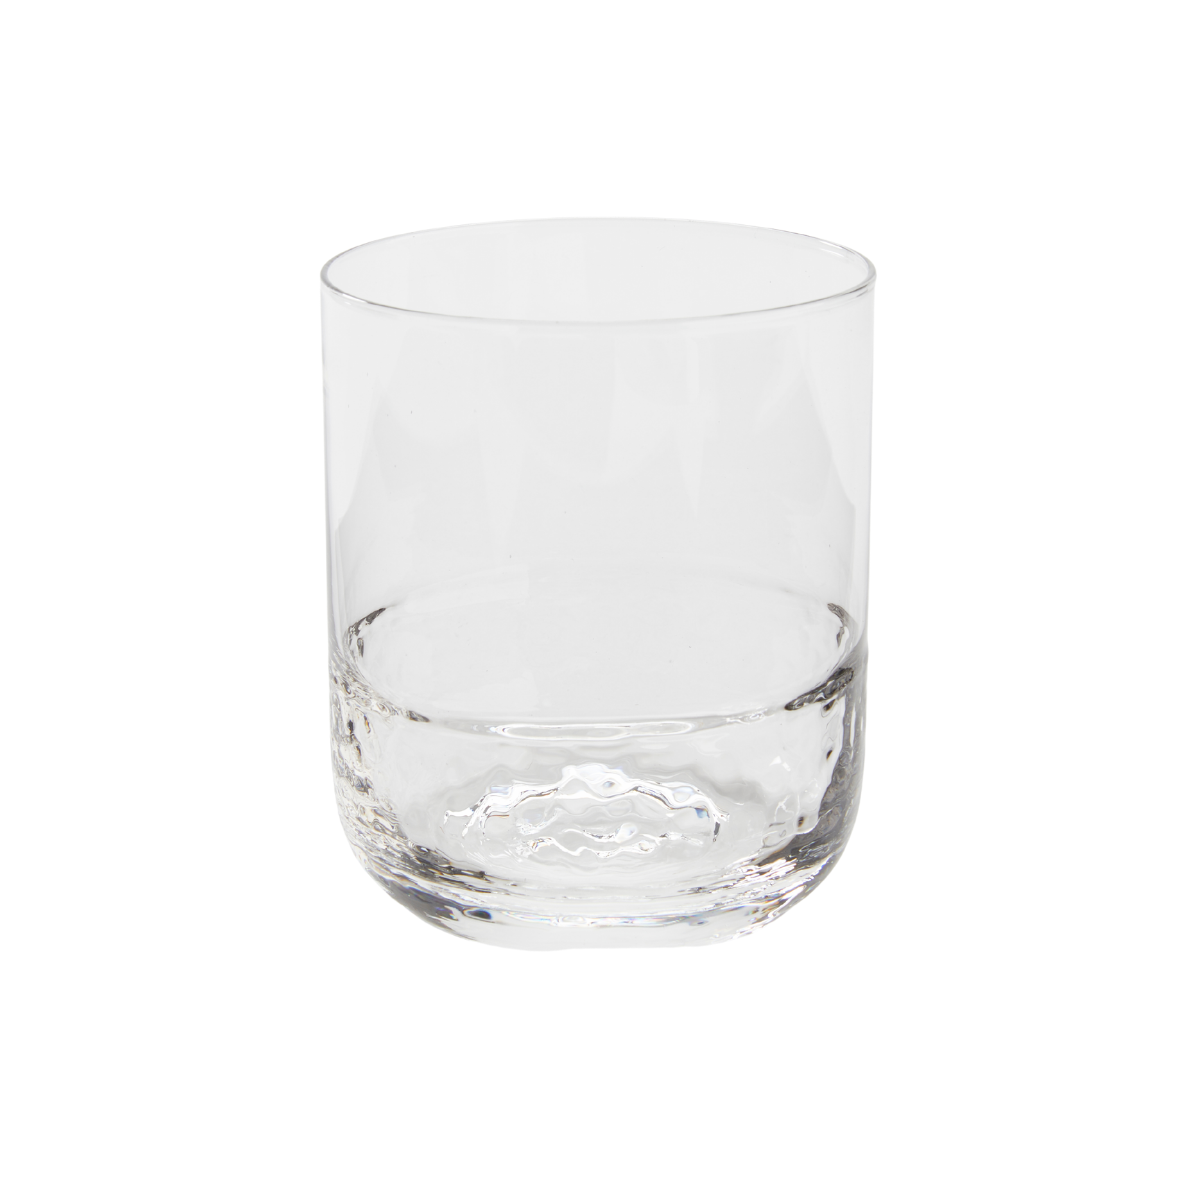 short drinking glass on white background.